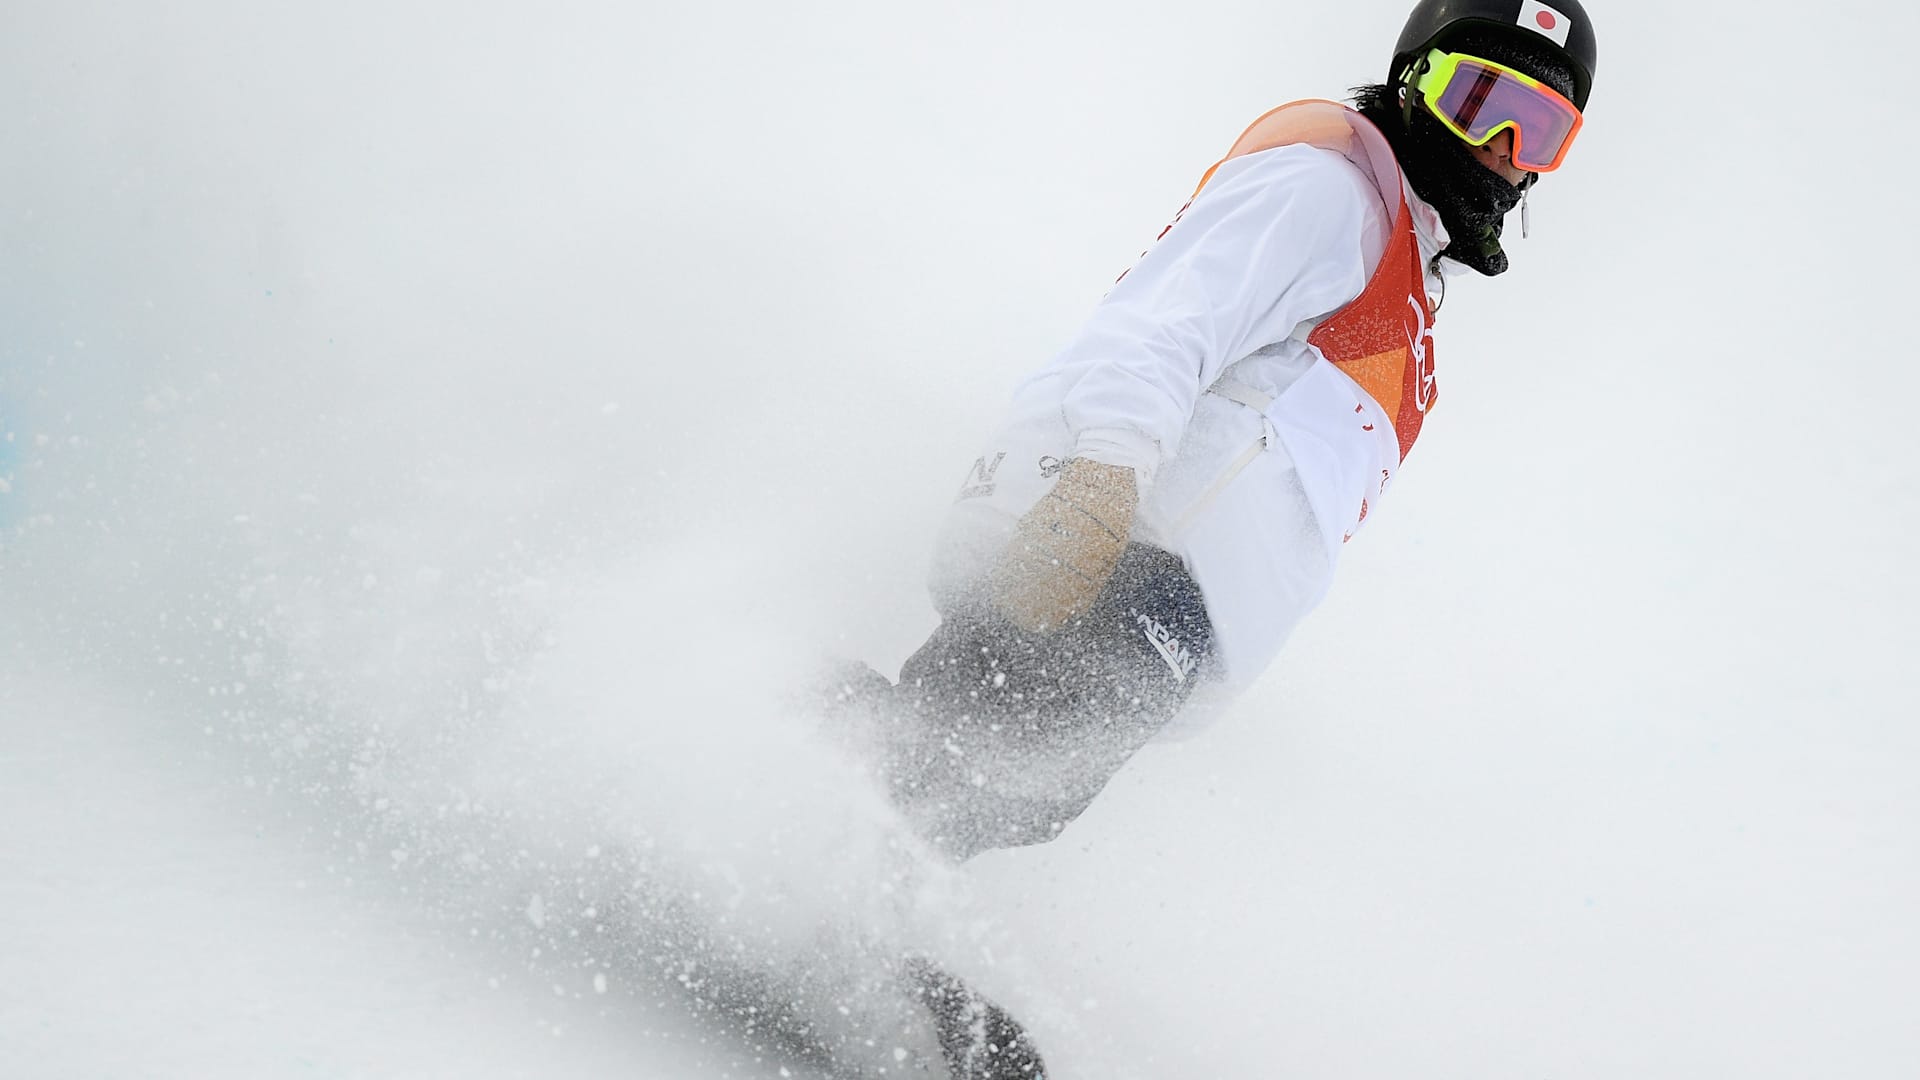 Snowboarders Slam Shaun White for Quitting